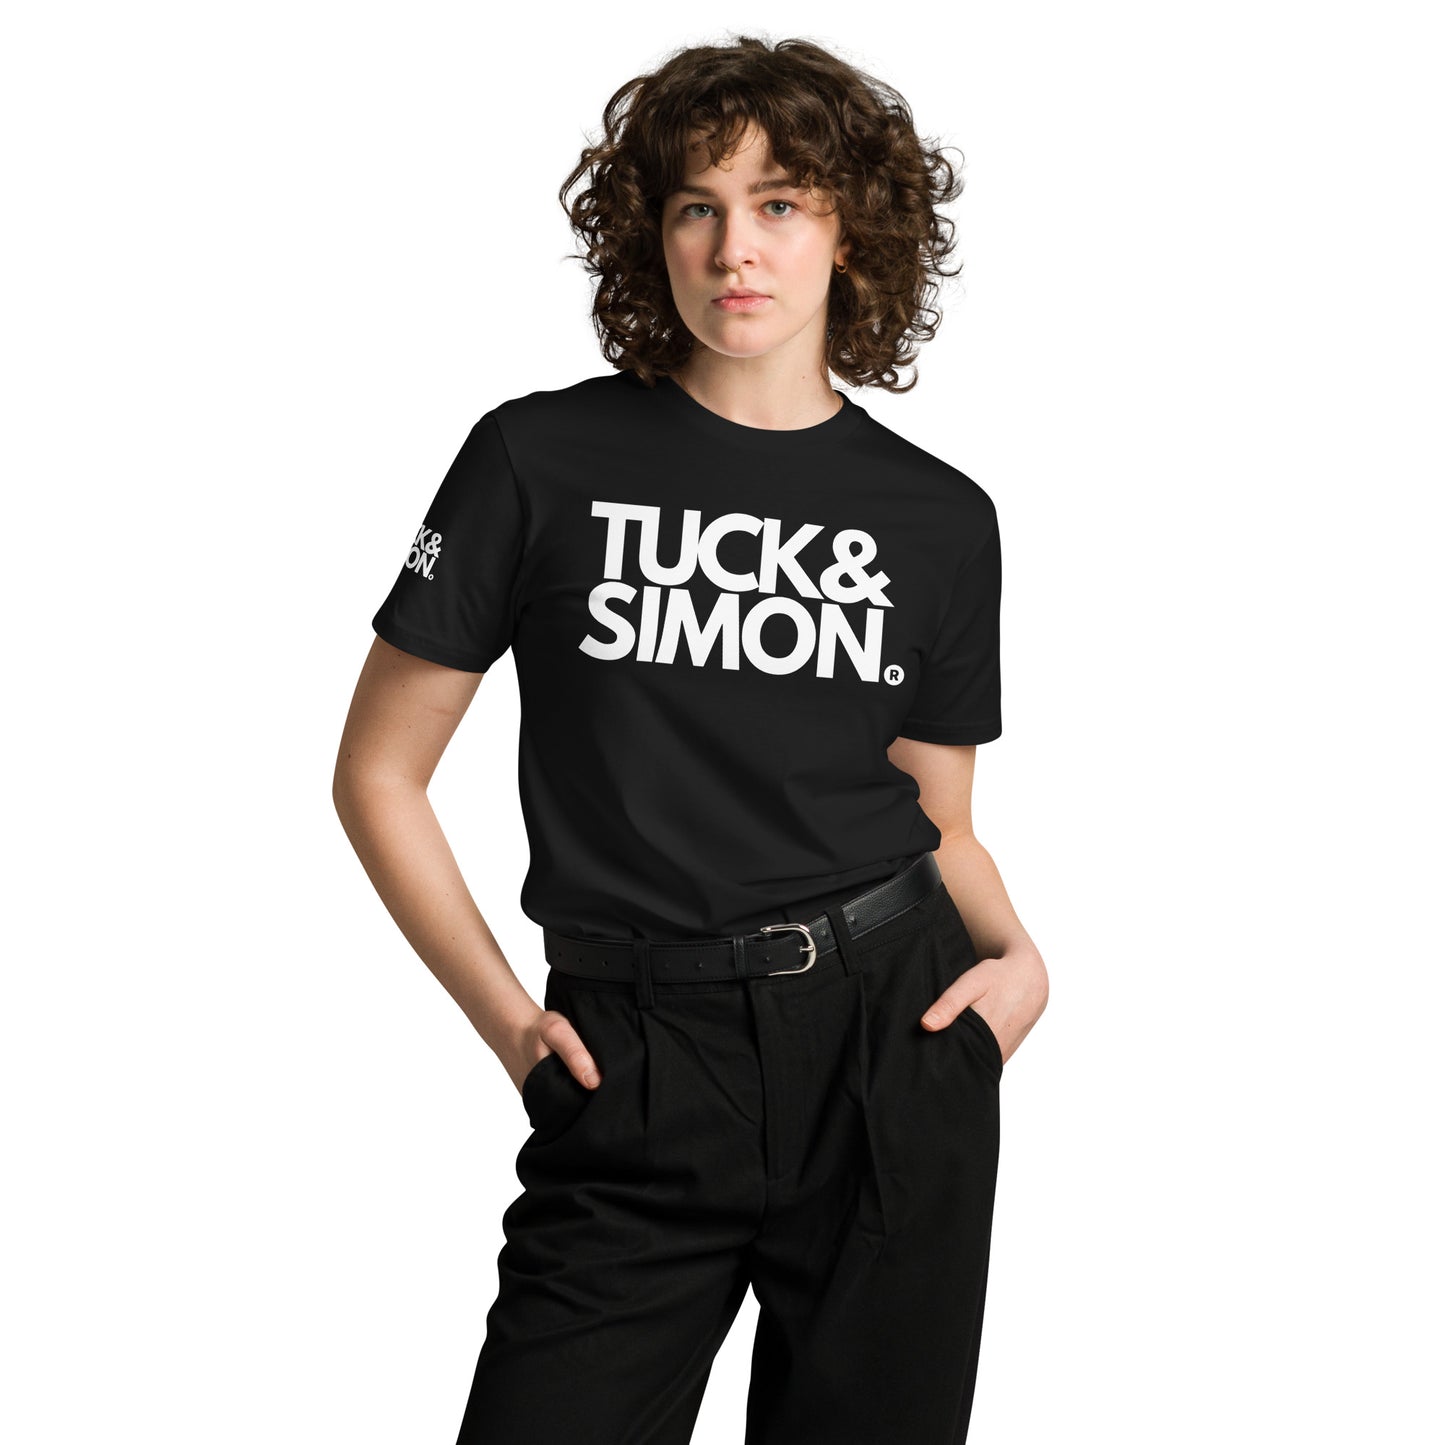 Tuck&Simon Casuals Statement T-Shirt